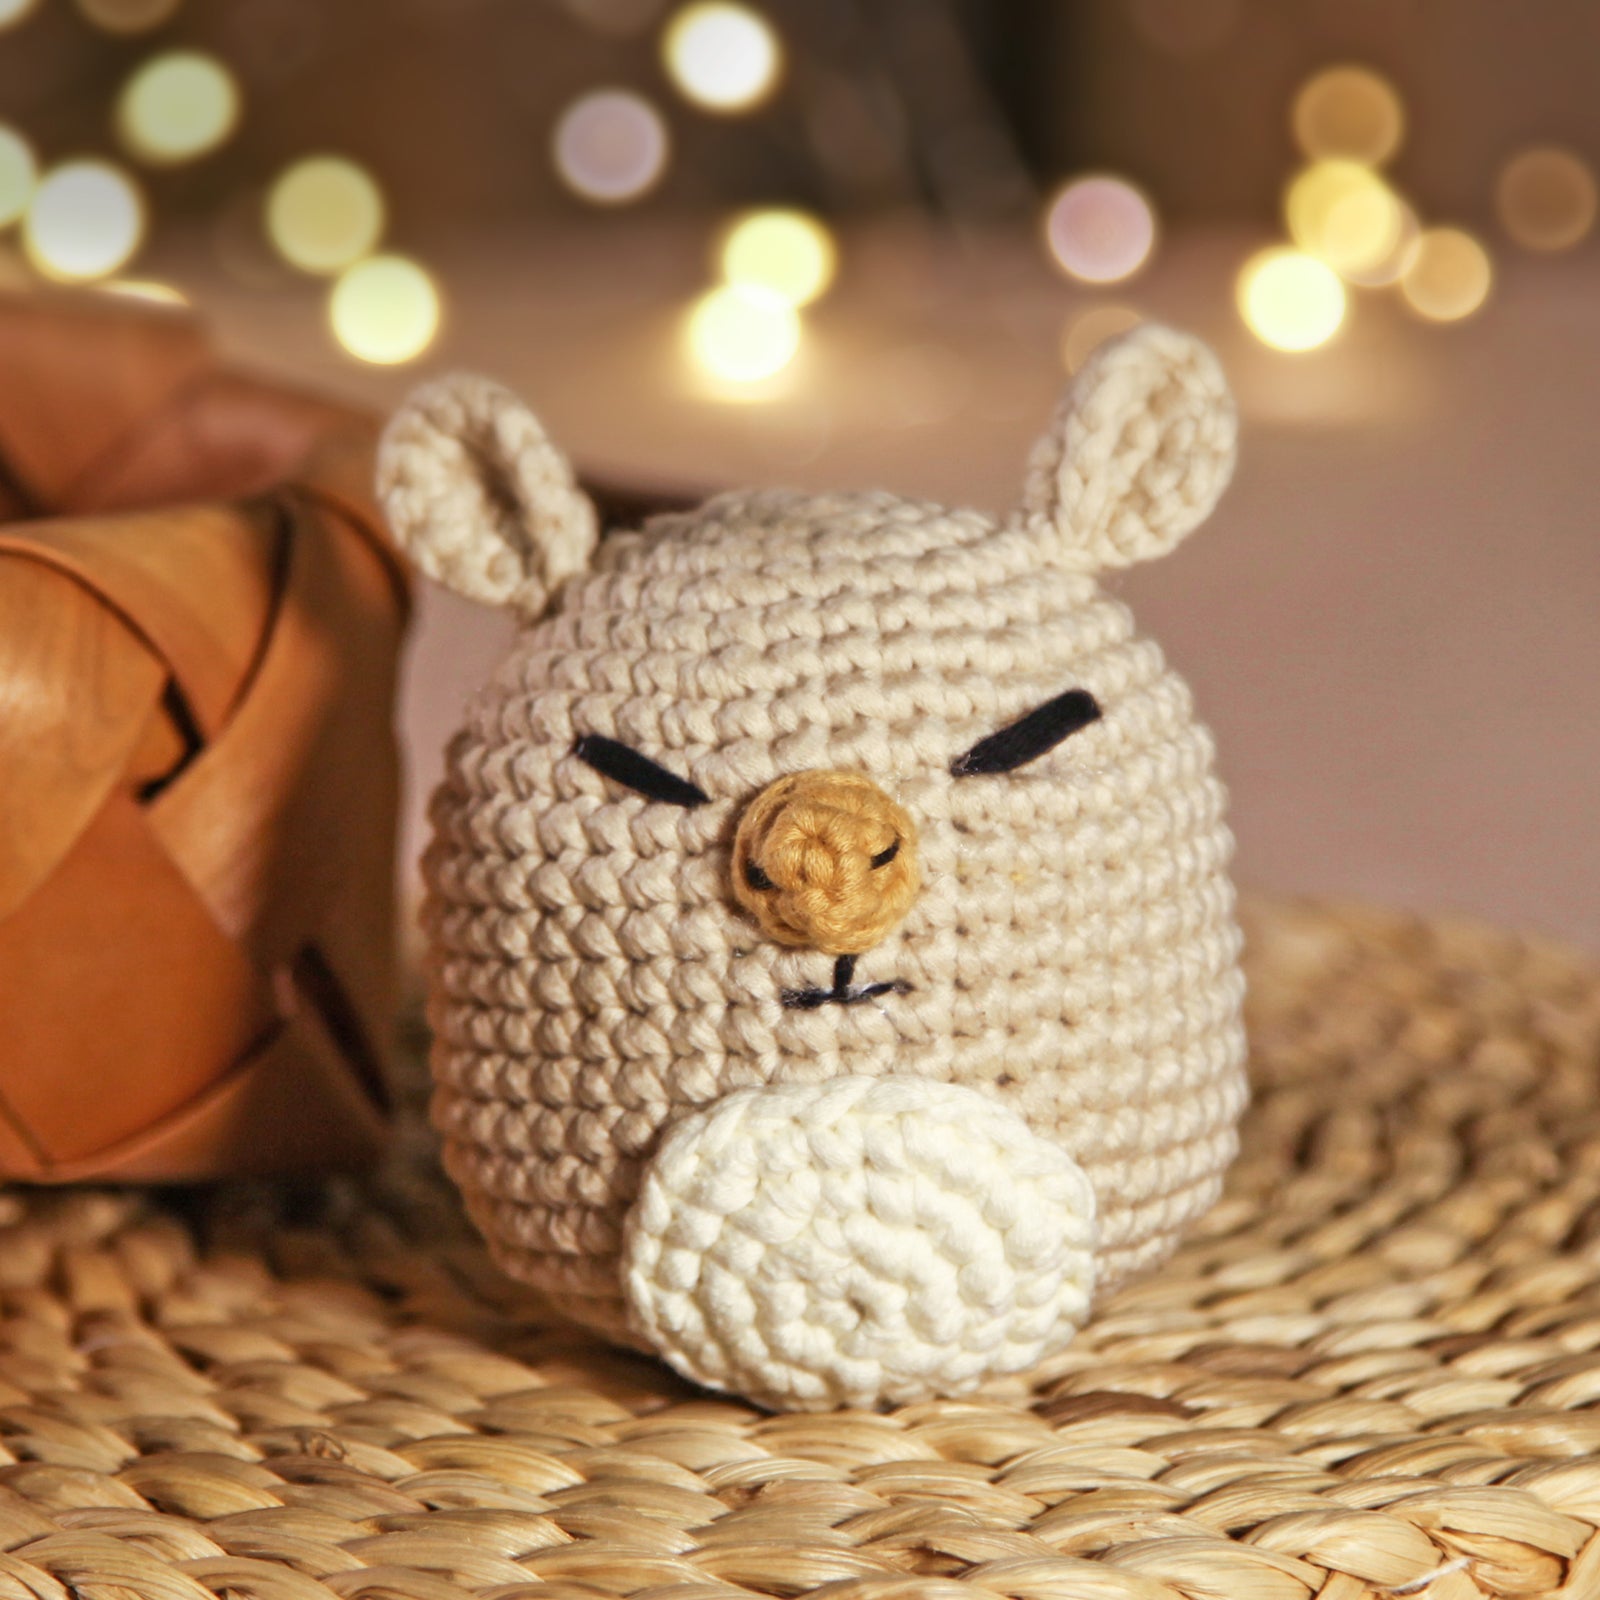  YAMAXIN 3PCS Animal Crochet kit for Beginners, Capybara Giraffe  Koala Crochet Starter Kits DIY Craft Gift for Complete Adult and Kid  Crochet Stuffed Kit with Step-by-Step Video Tutori